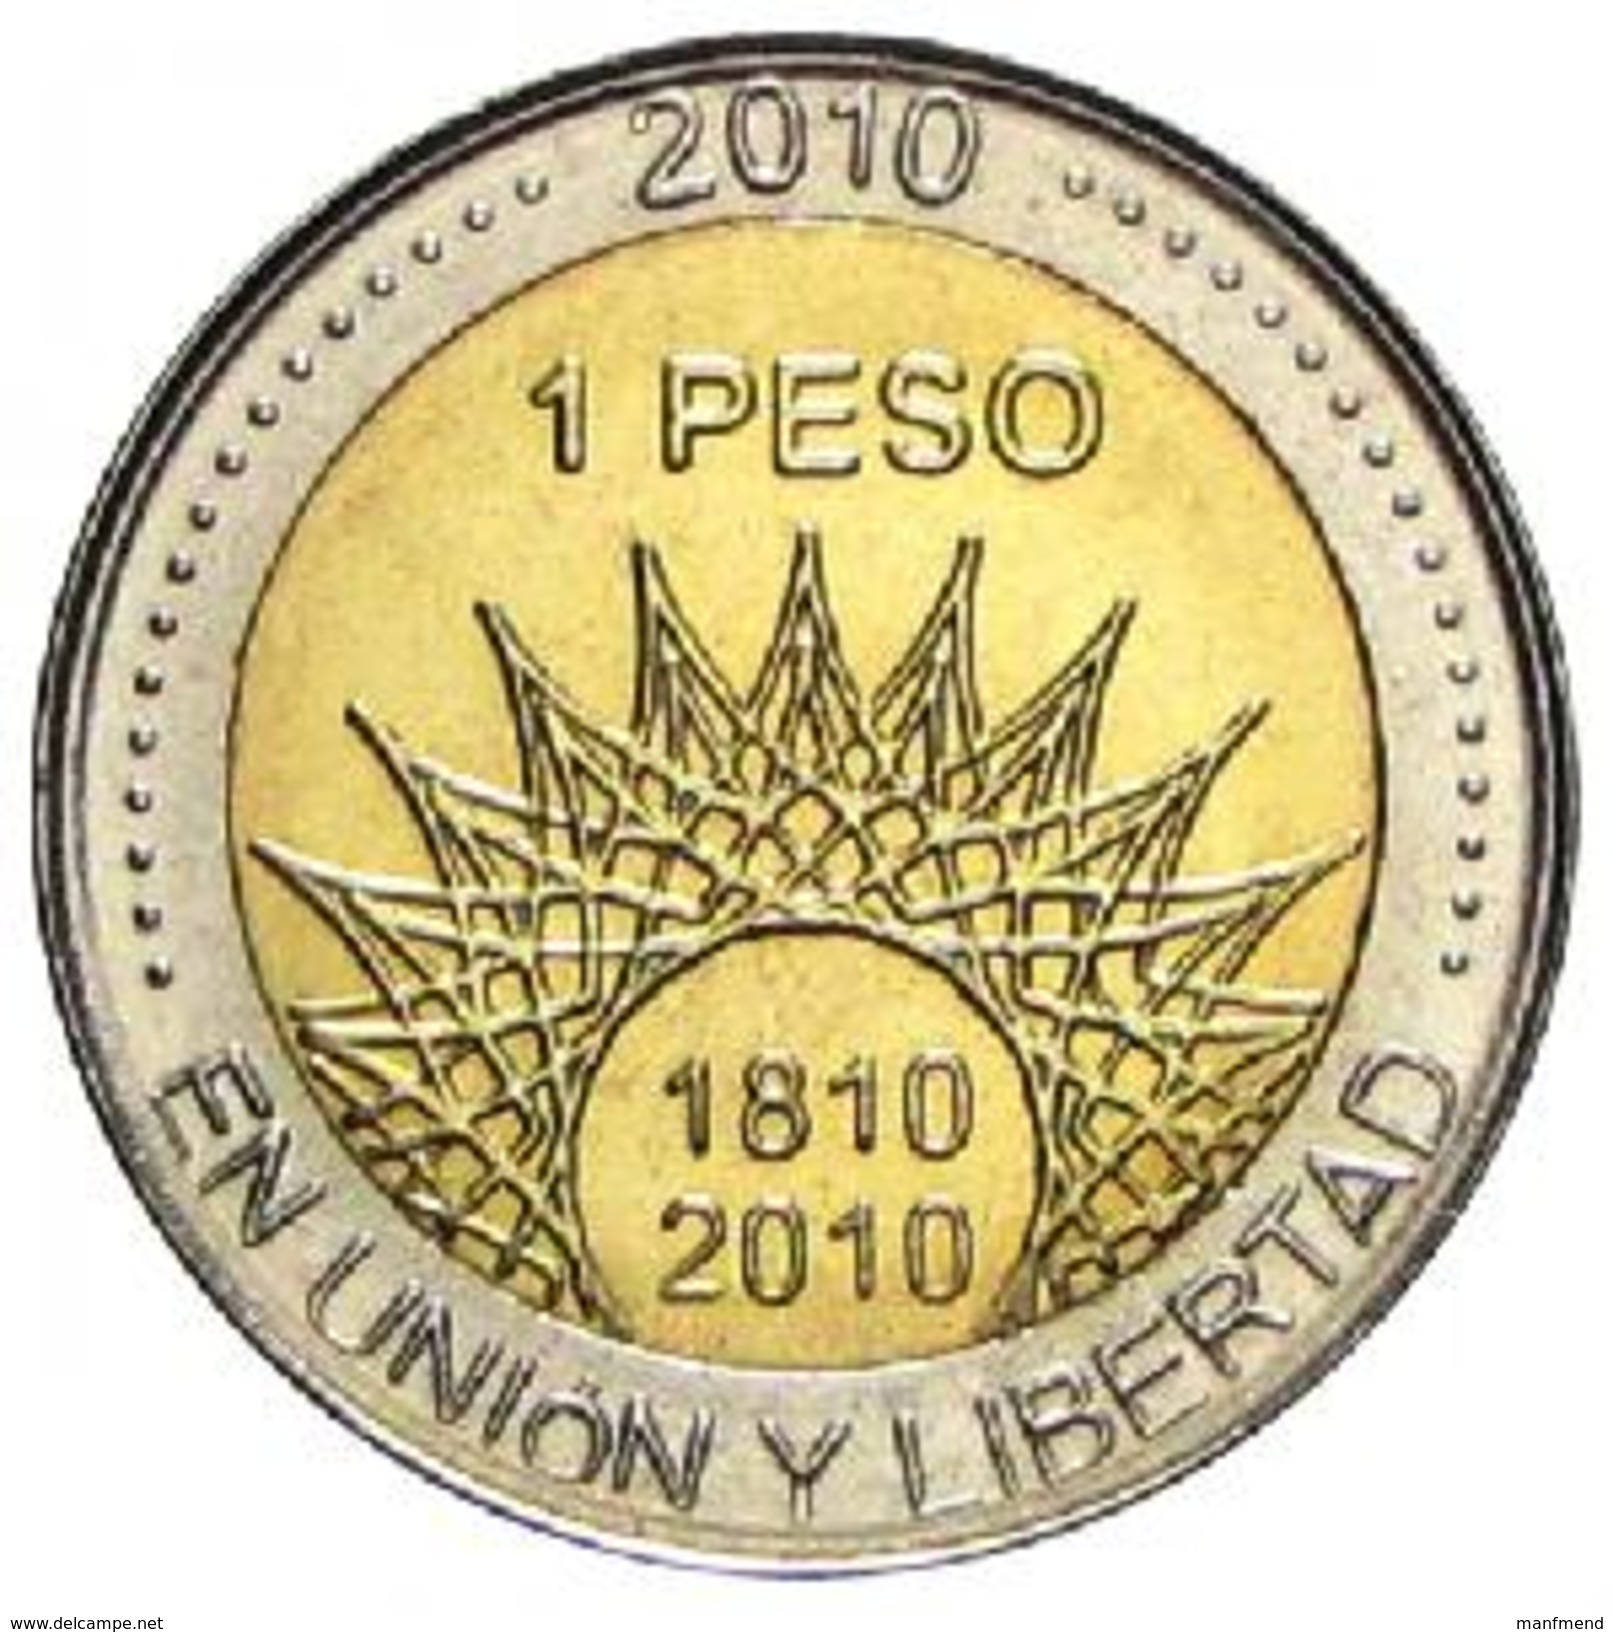 Argentina - 2010 - 1 Peso - Bicentennial "El Palmar" - KM 156 - Unc - Argentine